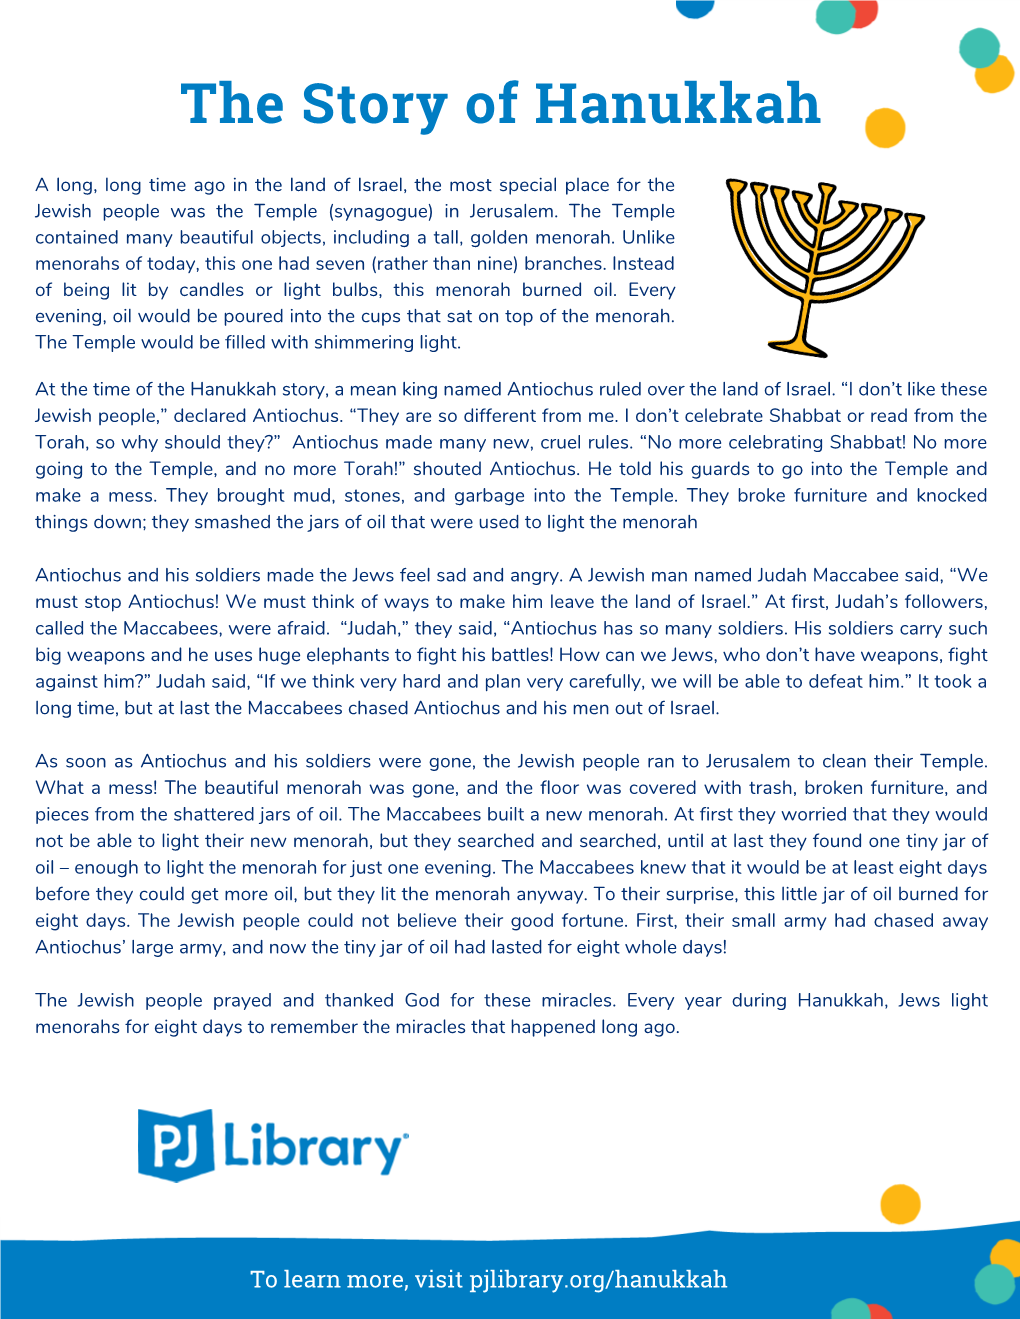 Copy of the Story of Hanukkah